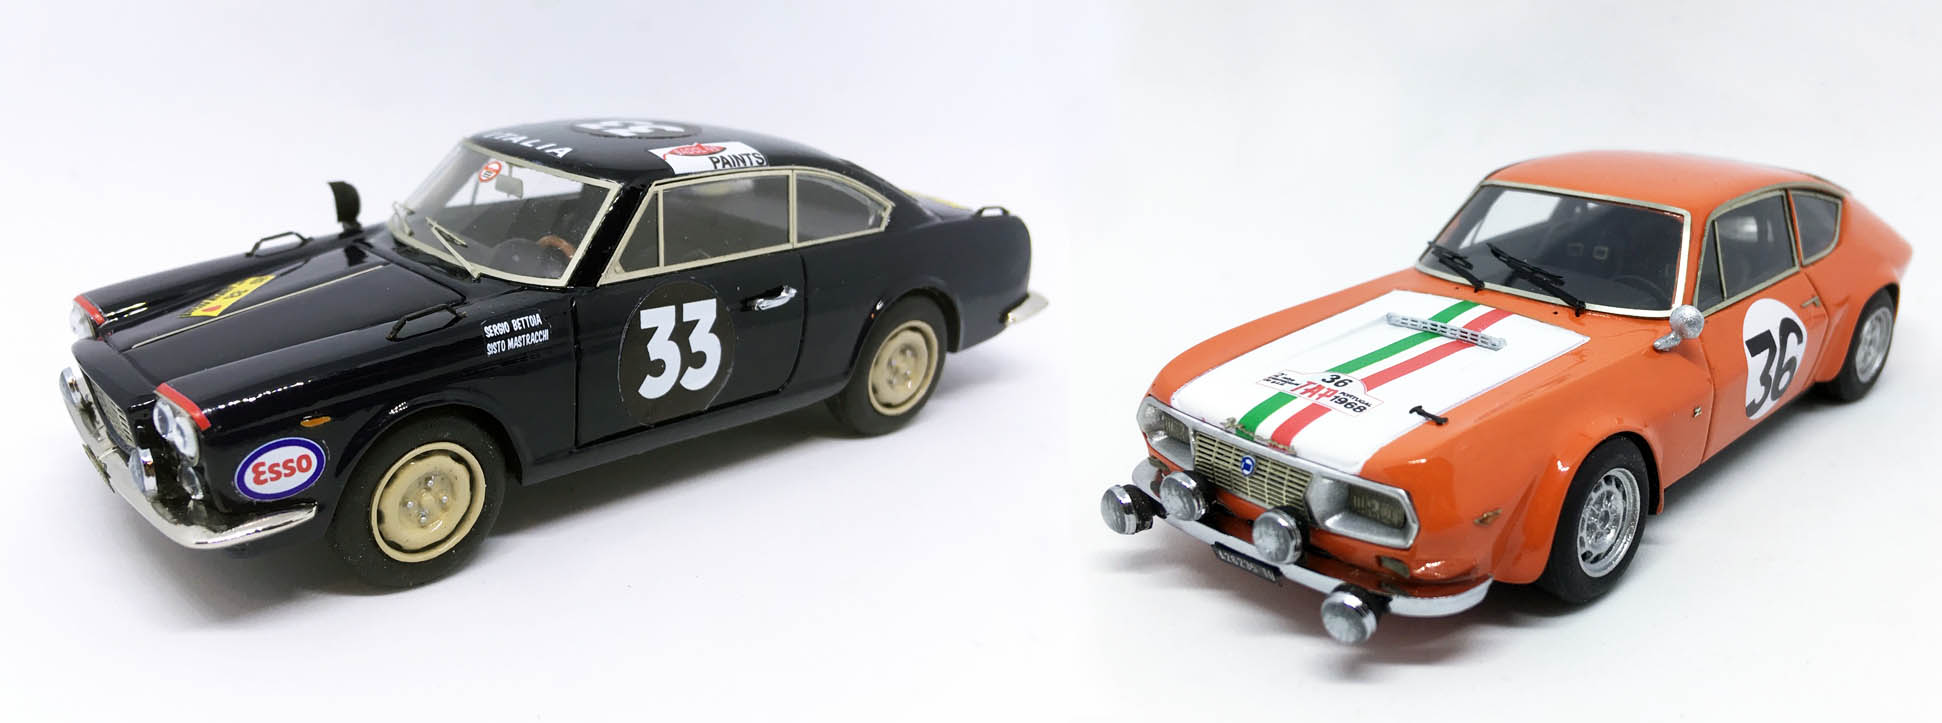 Lancia model club modellismo auto scala 1/43 DECALS – Automodellismo scala  1/43 Lancia model club